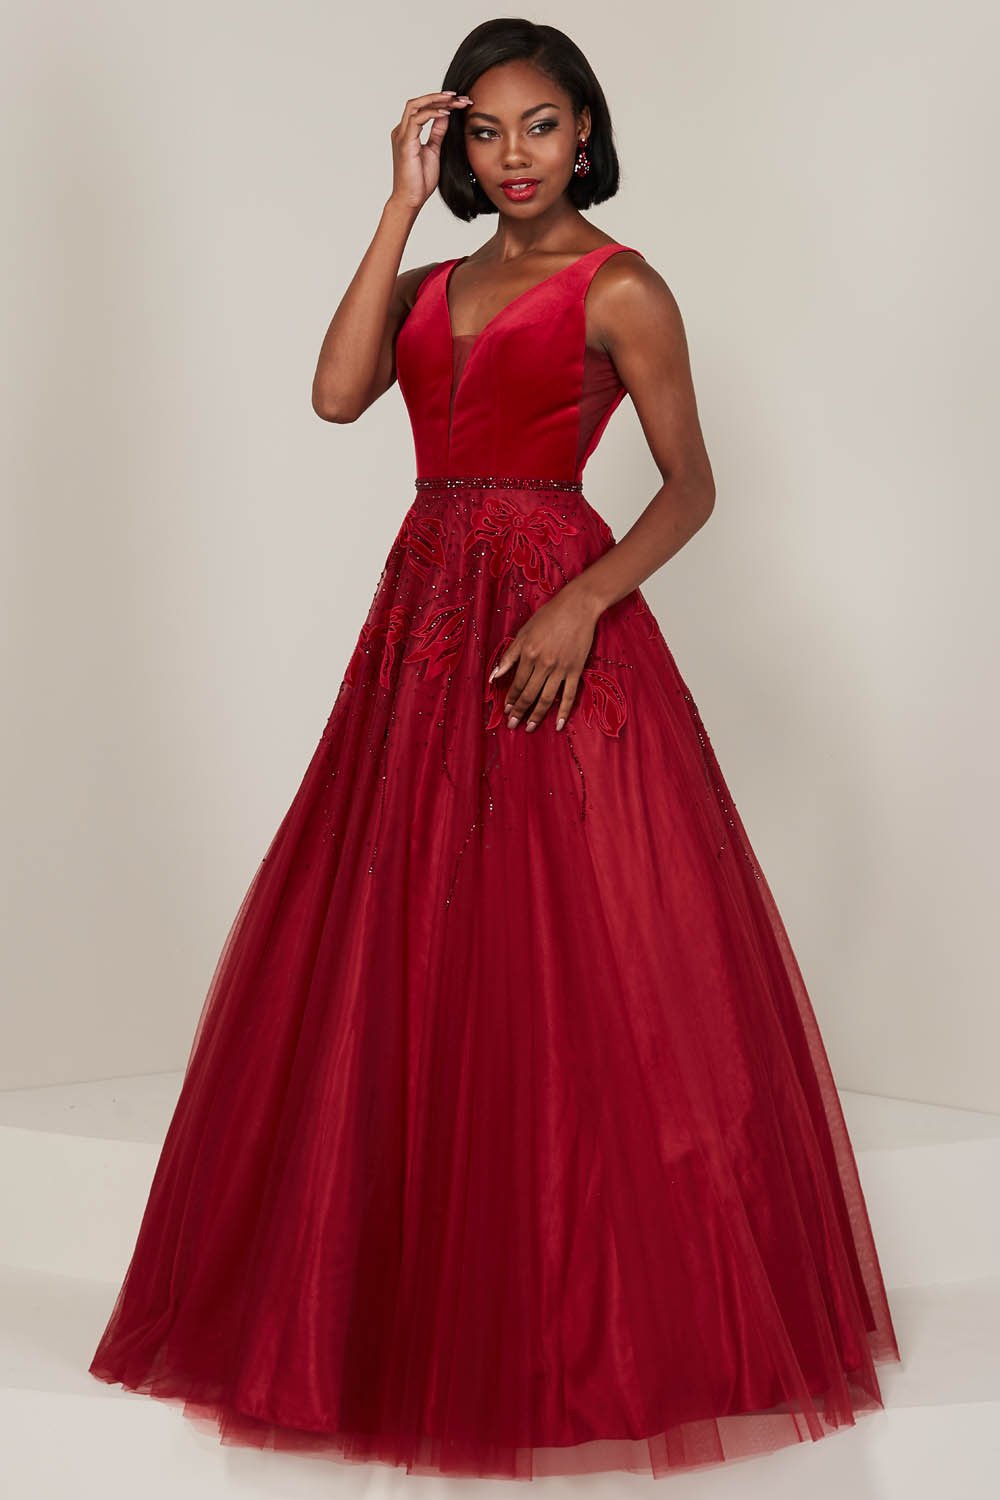 Tiffany 16342 Dress - Formal Approach - Tiffany Prom Dresses